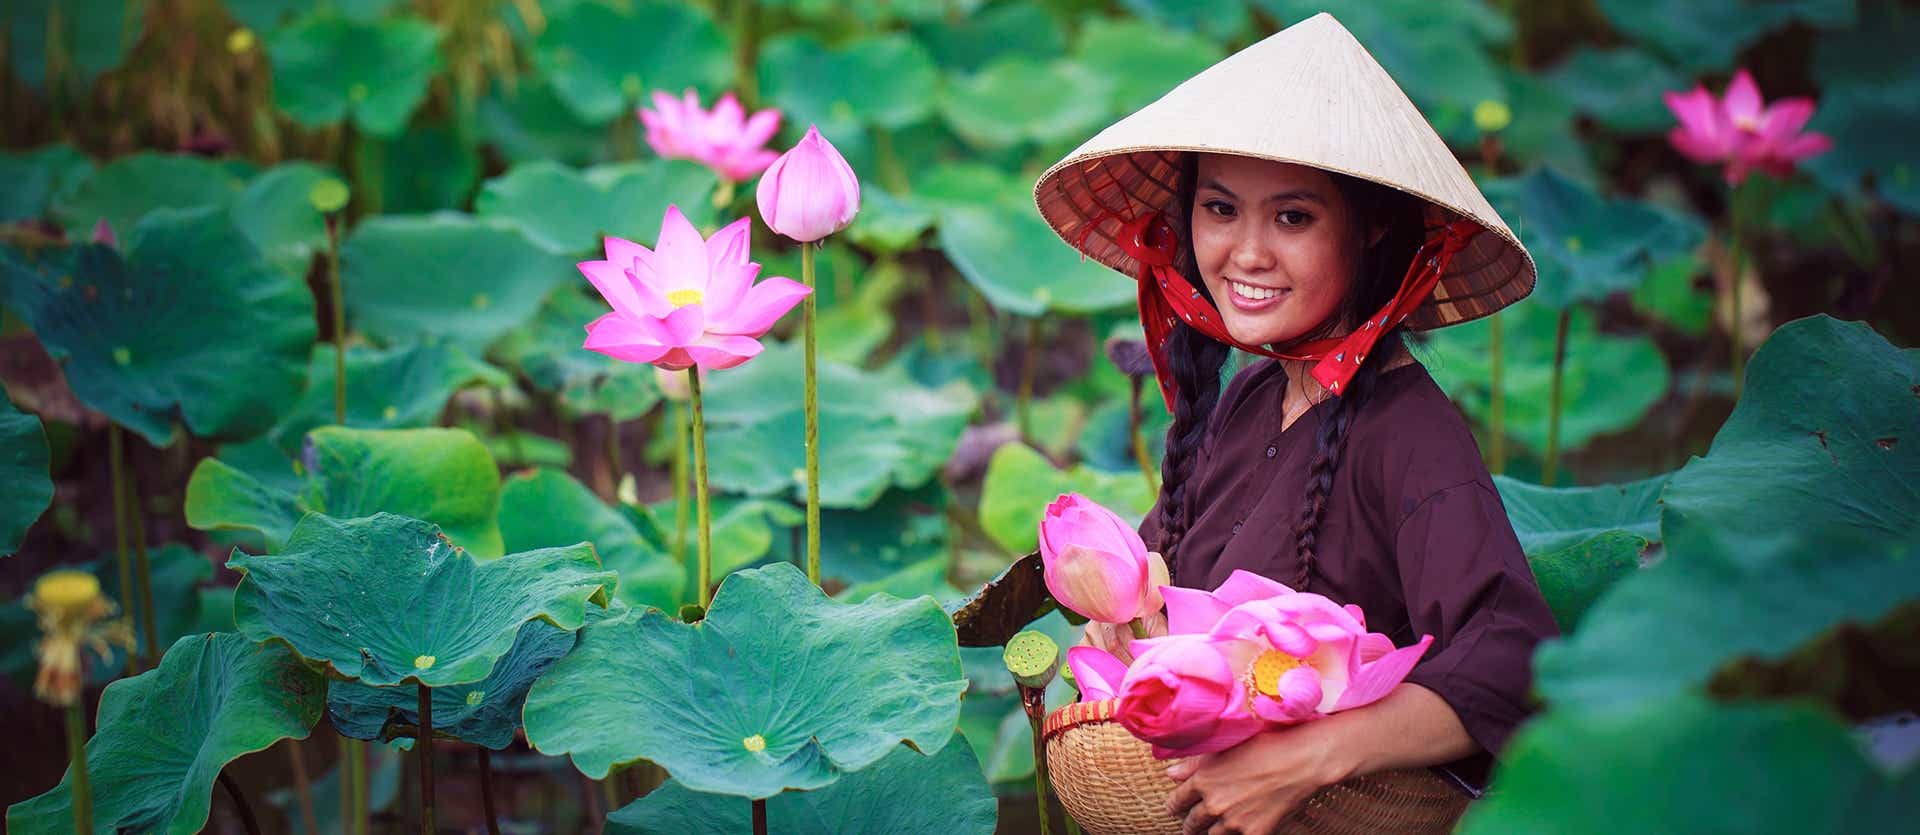 Vietnamese Woman collecting Lotus Flowers <span class="iconos separador"></span> Mekong Delta